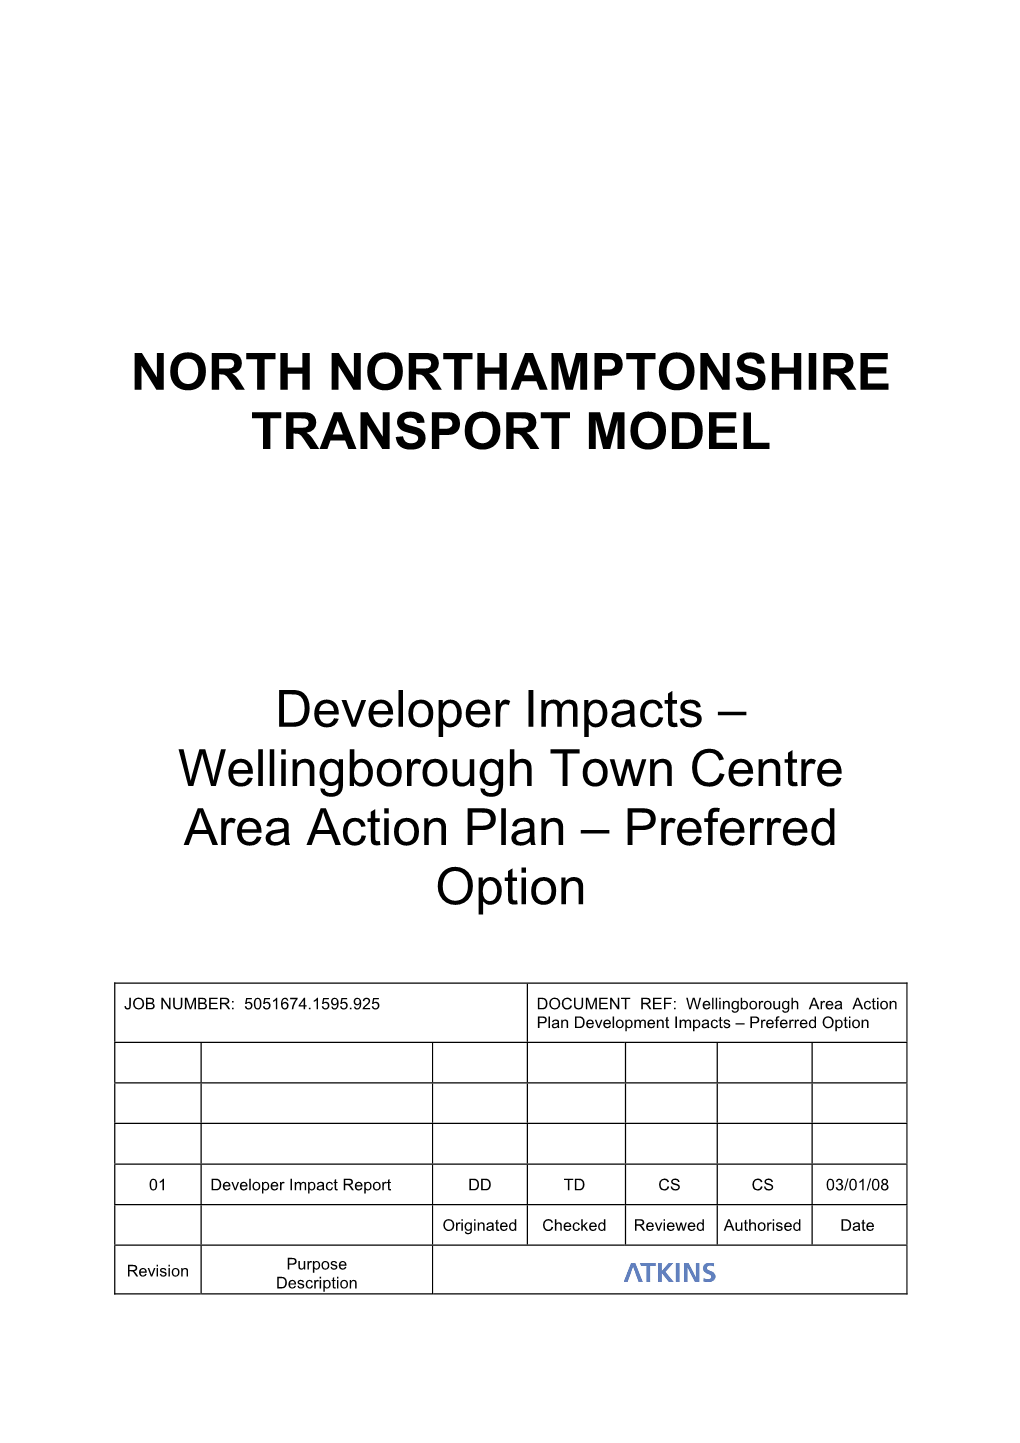 NORTH NORTHAMPTONSHIRE TRANSPORT MODEL Developer Impacts – Wellingborough Town Centre Area Action Plan – Preferred Option